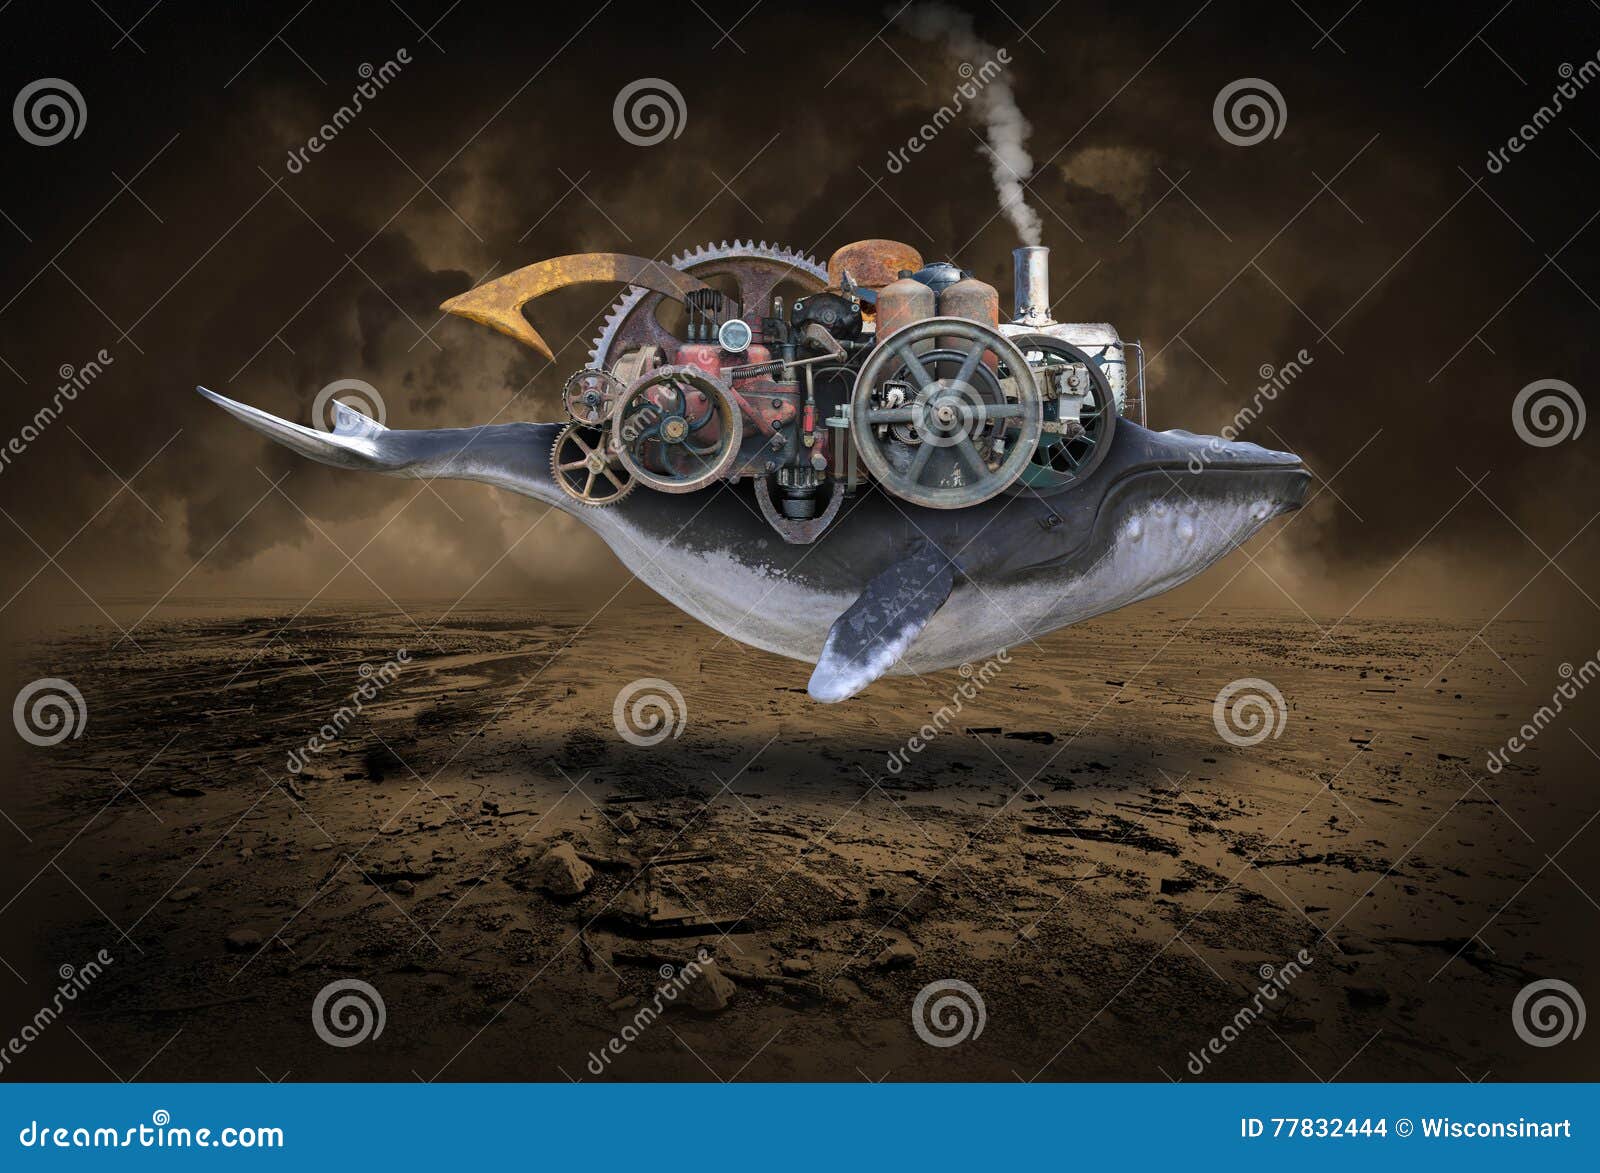 steampunk whale, flying machine, imagination